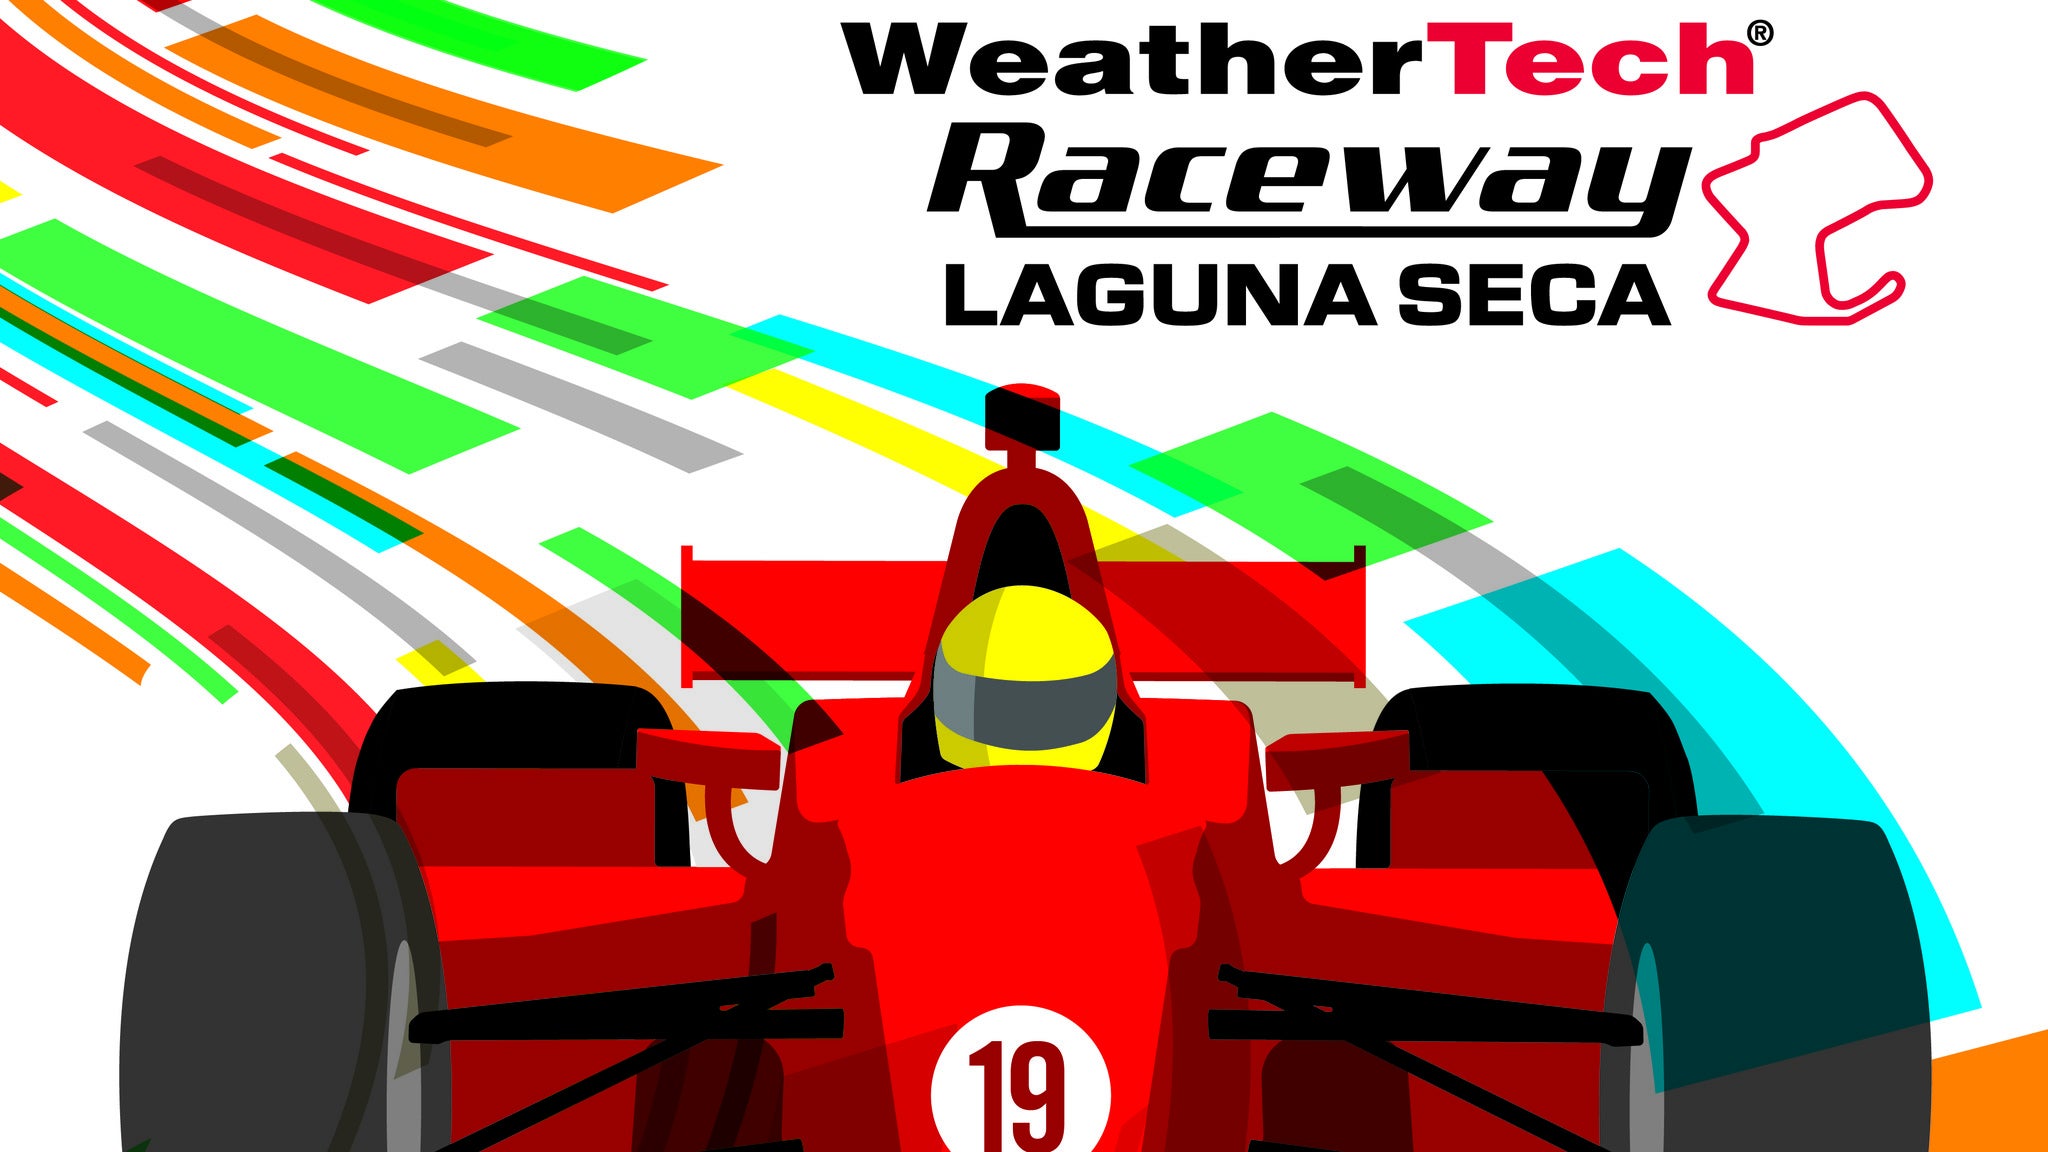 WeatherTech Raceway Laguna Seca presale information on freepresalepasswords.com